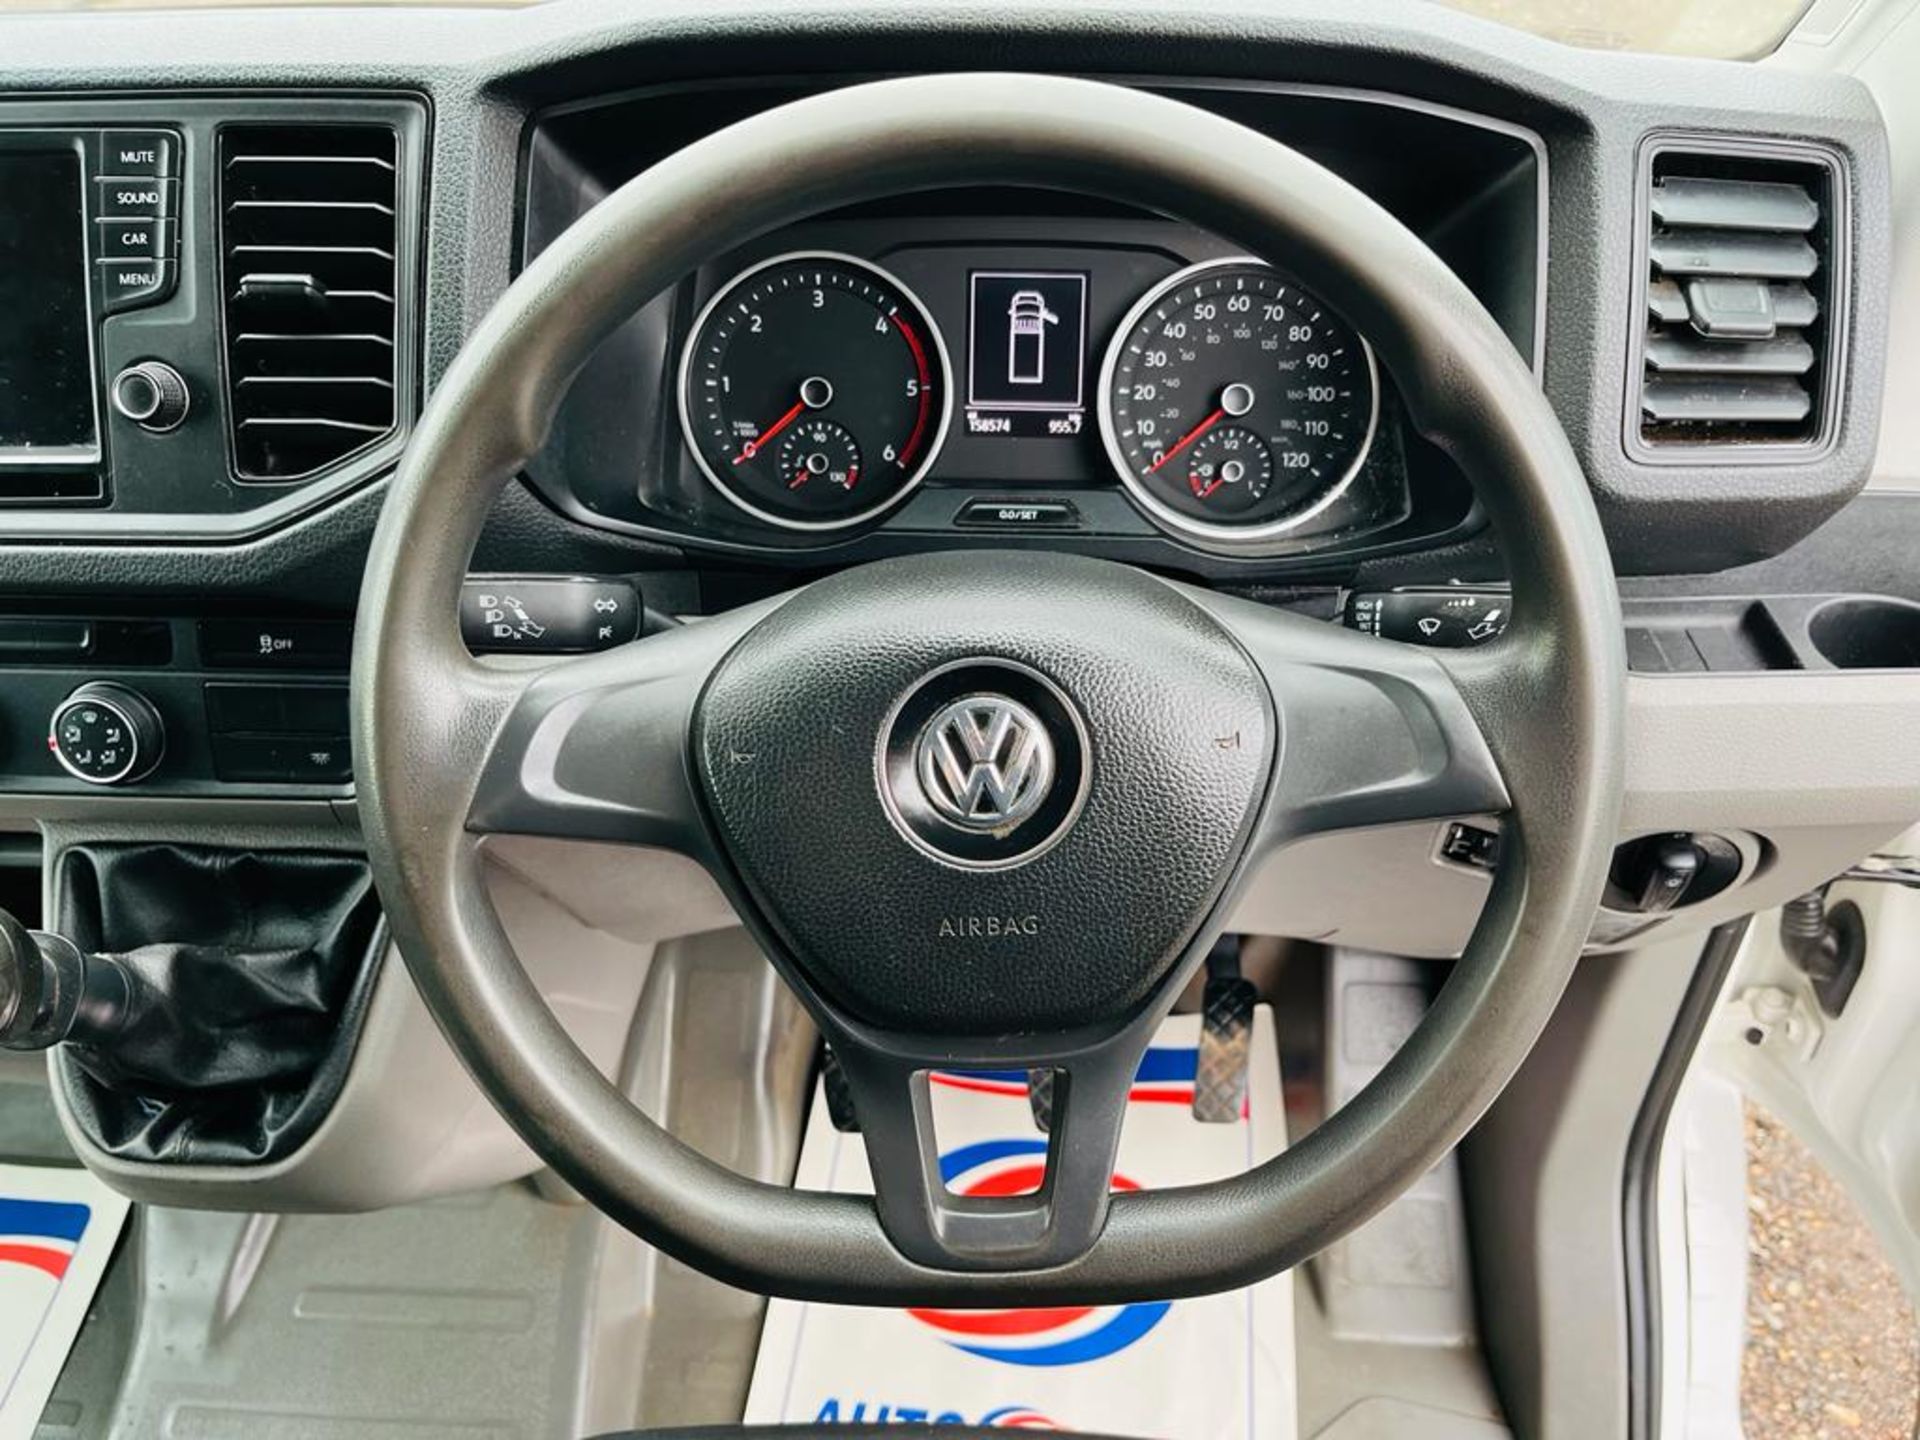 ** ON SALE **Volkswagen Crafter Cr35 2.0 TDI Startline BlueMotion FWD 2019 '19 Reg' ULEZ Compliant - Image 14 of 25